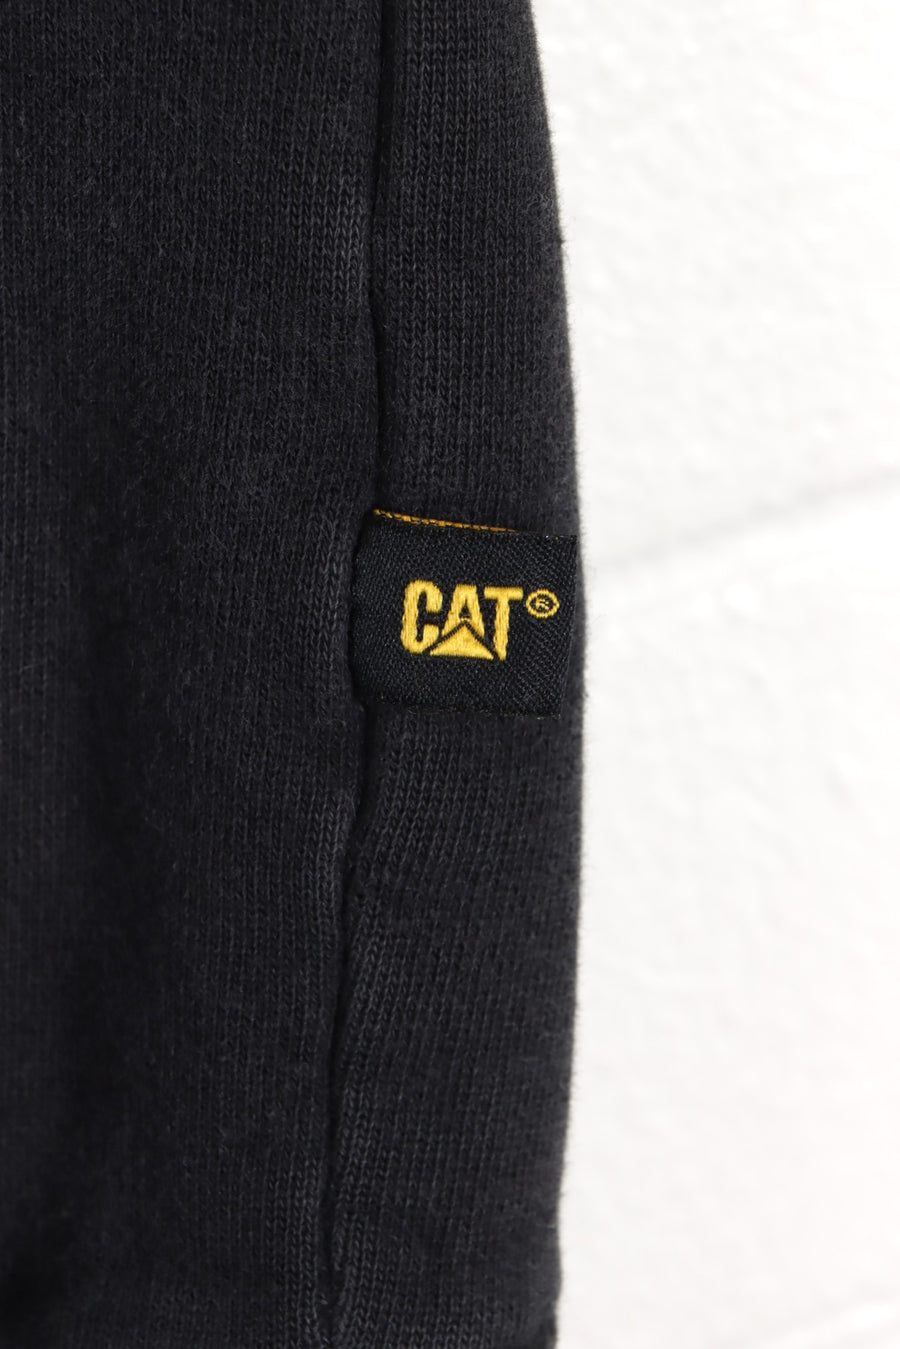 CAT Workwear Embroidered Big Logo Black Hoodie (M)